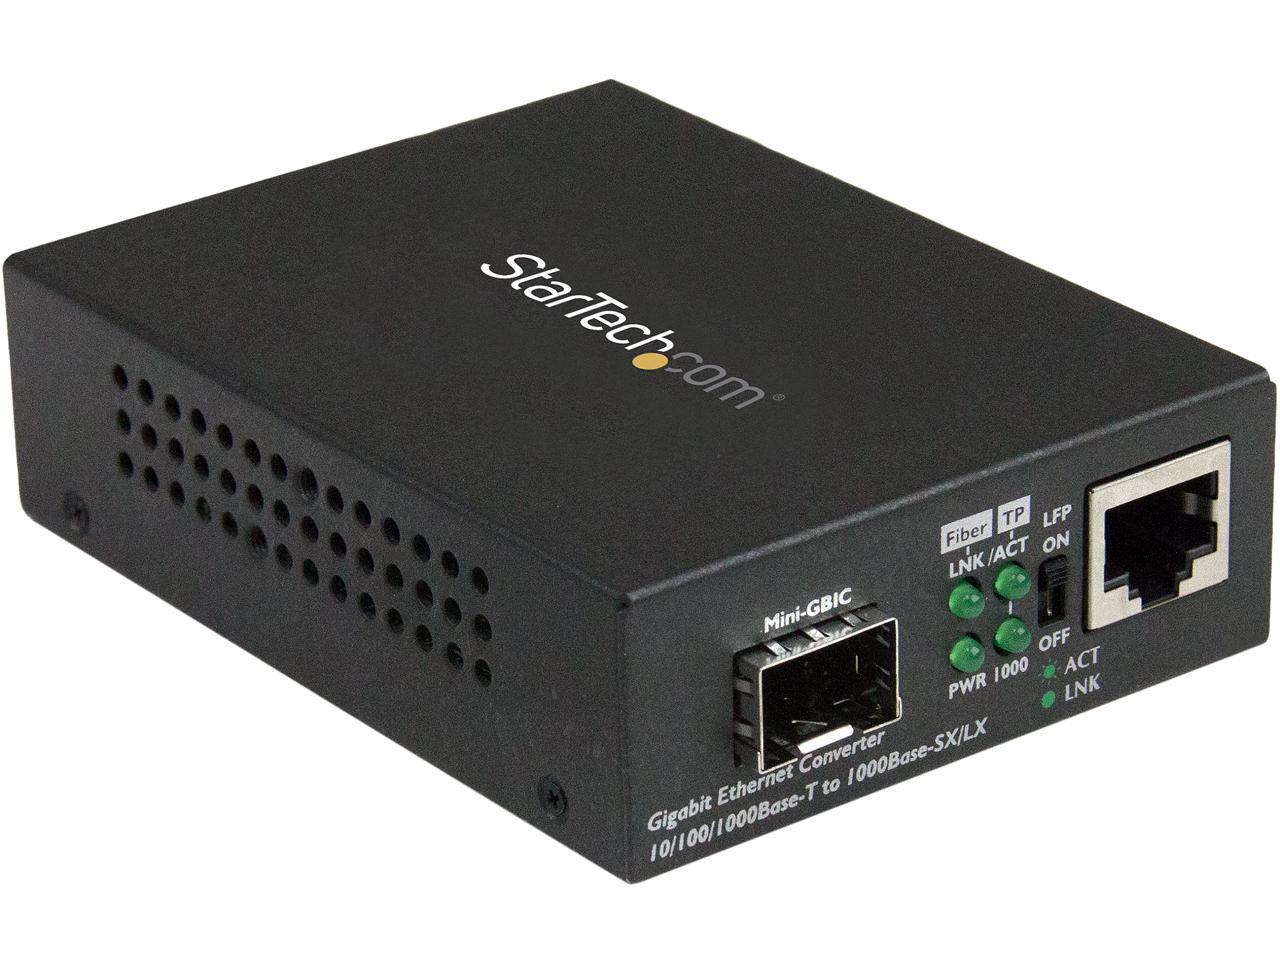 Primary image for StarTech.com Gigabit Ethernet Fiber Media Converter with Open SFP Slot - Support